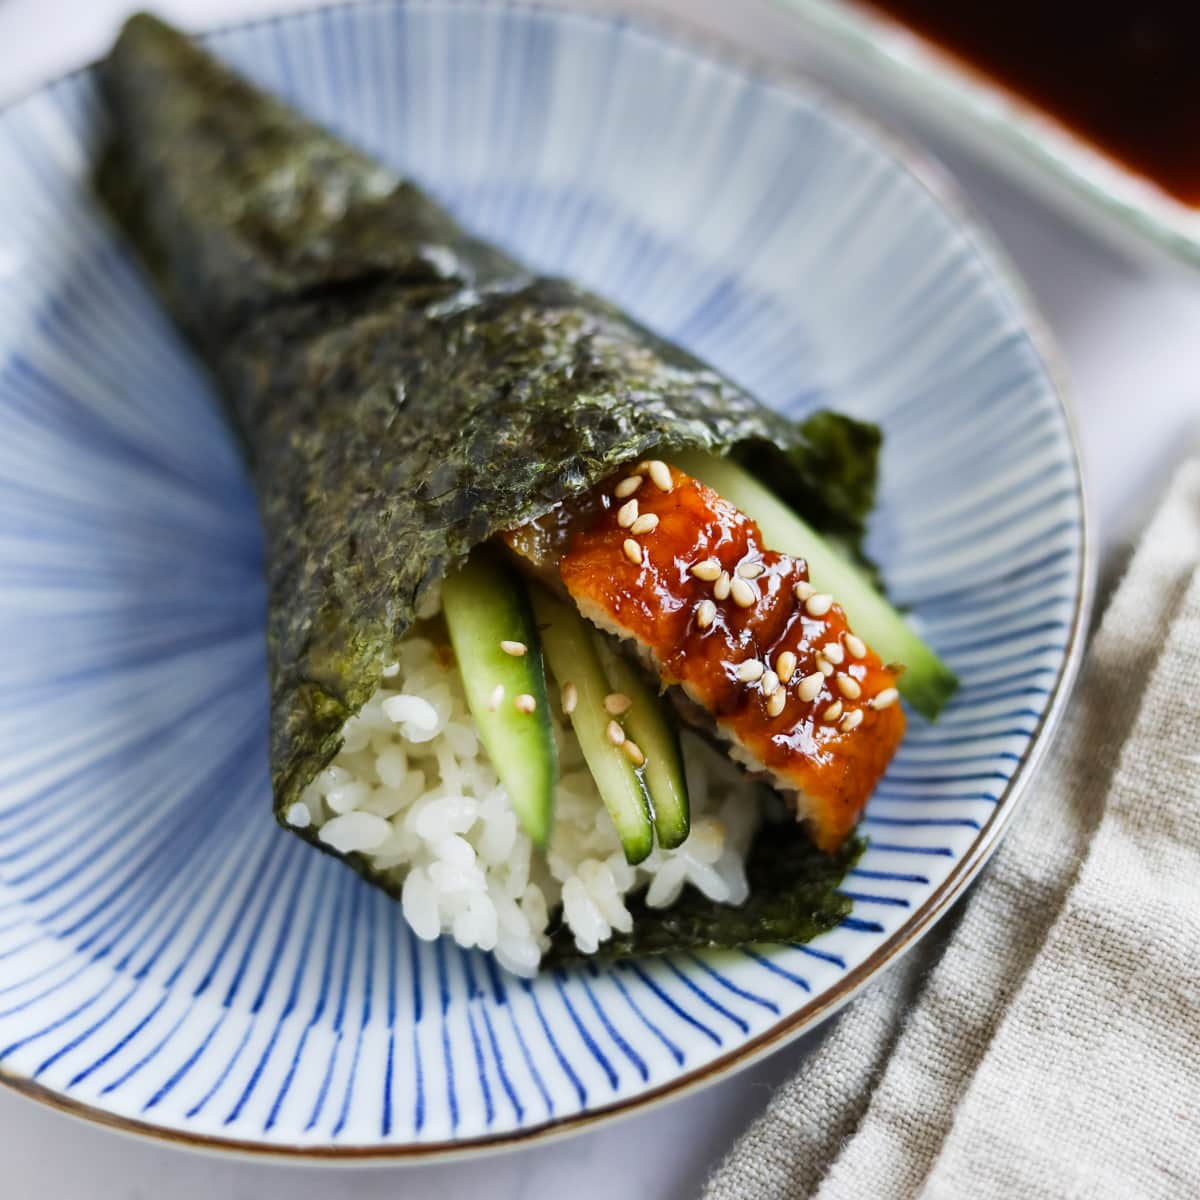 Unagi sushi (eel hand roll) with unagi, sesame seeds, and cucumber on a blue plate.